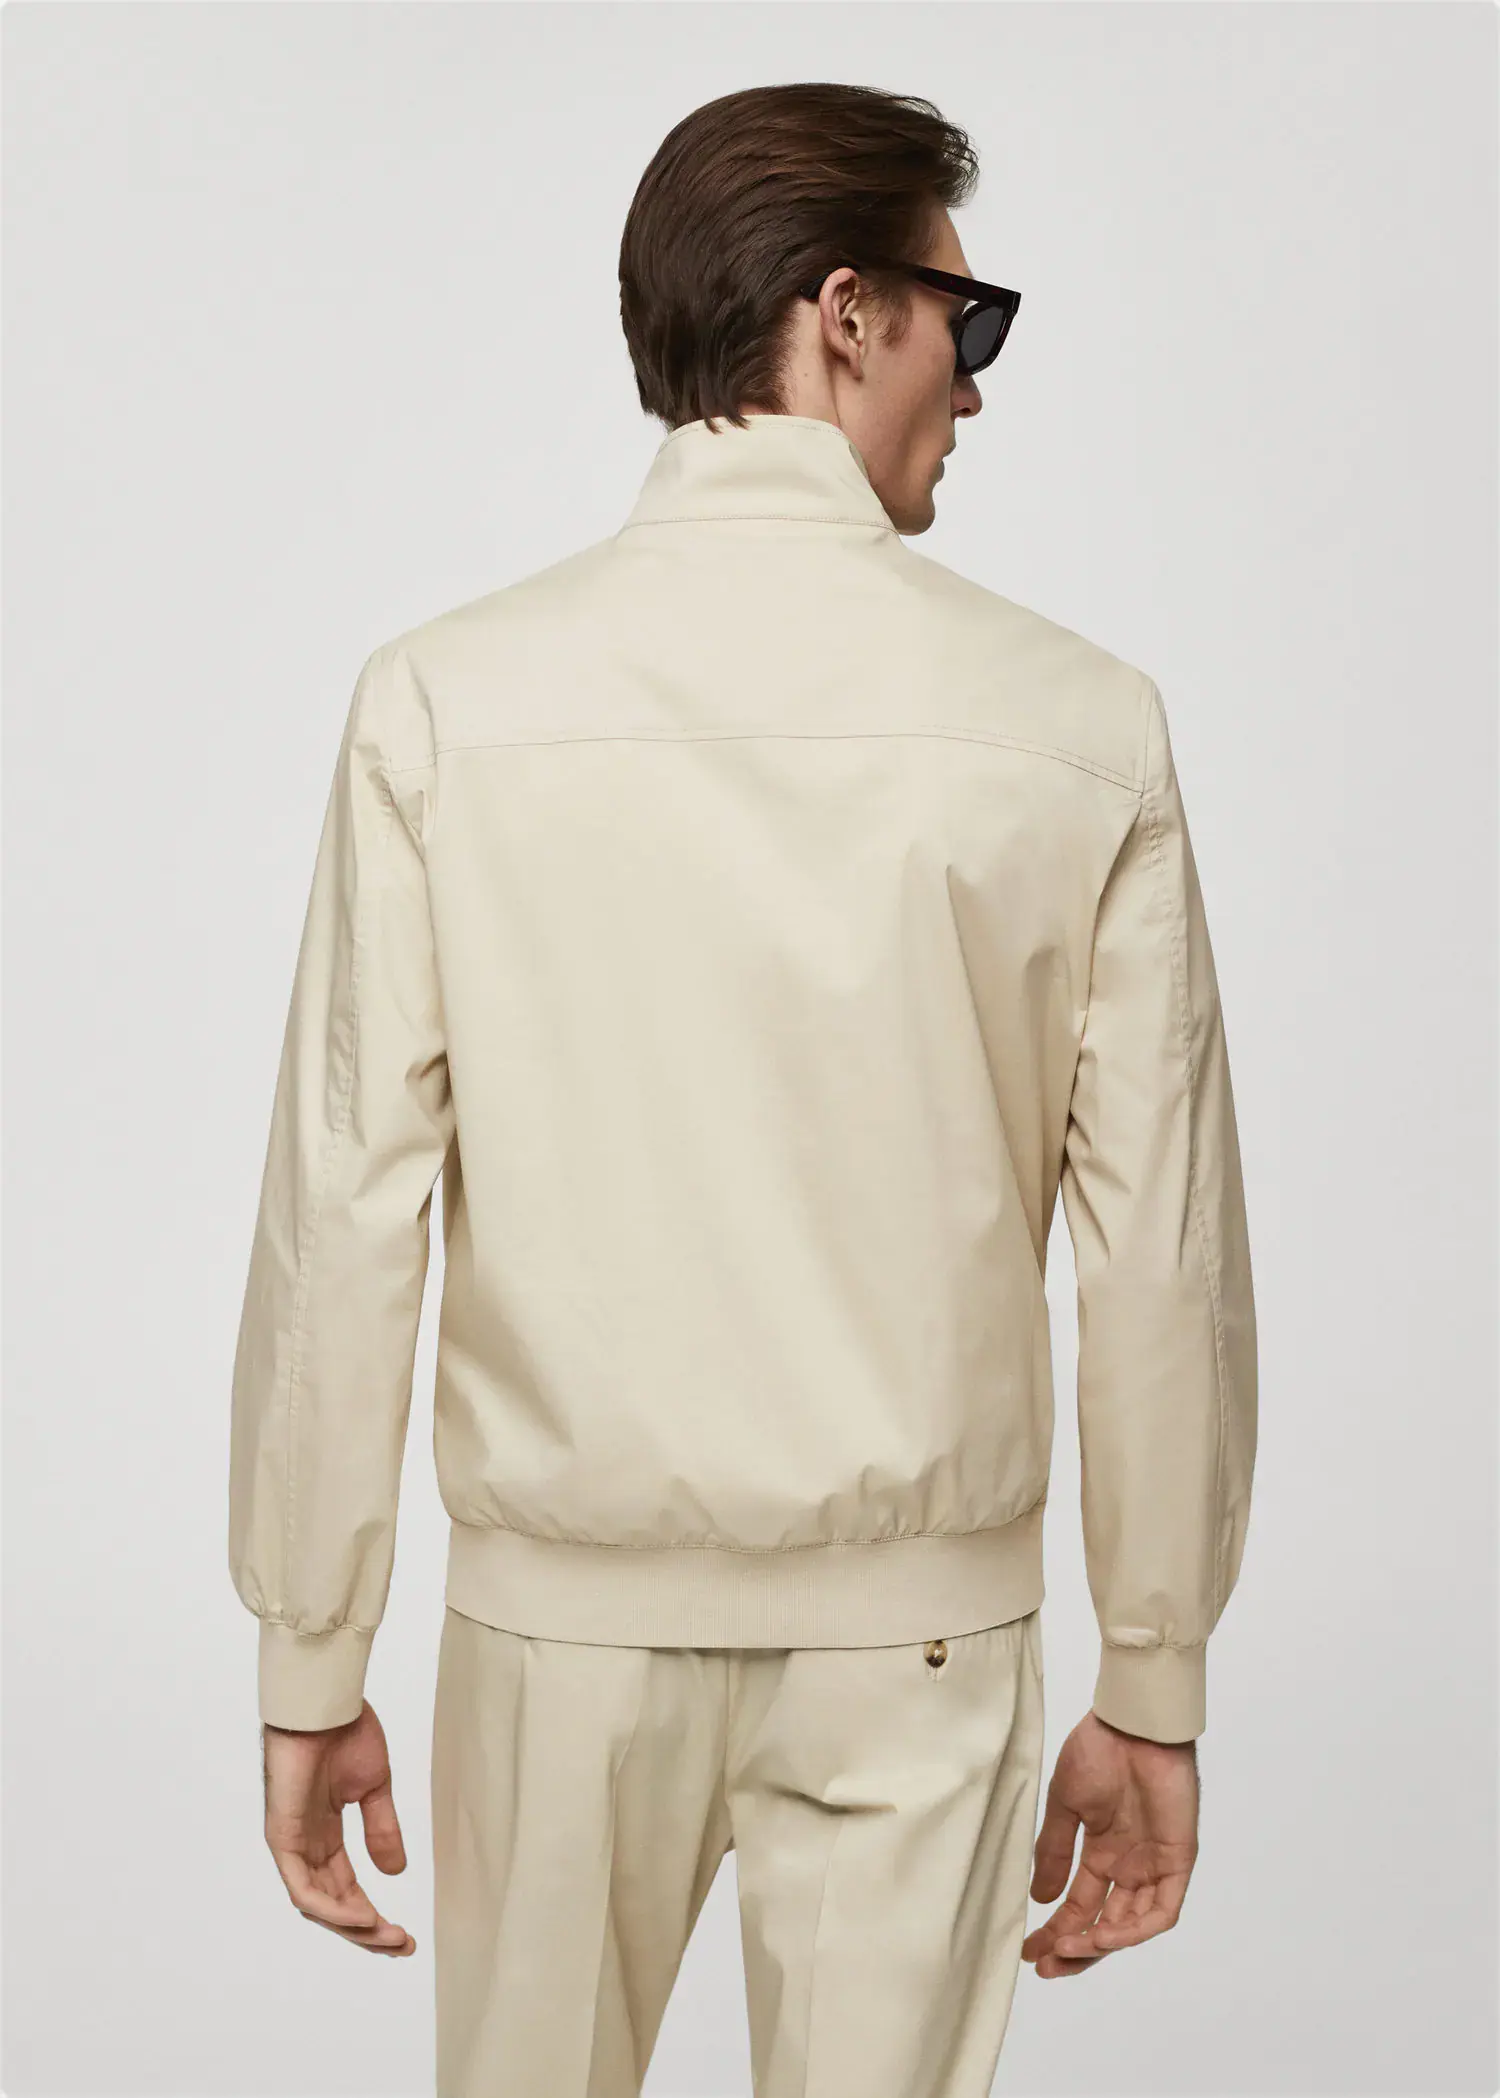 Mango Stretch cotton jacket with zipper. 3